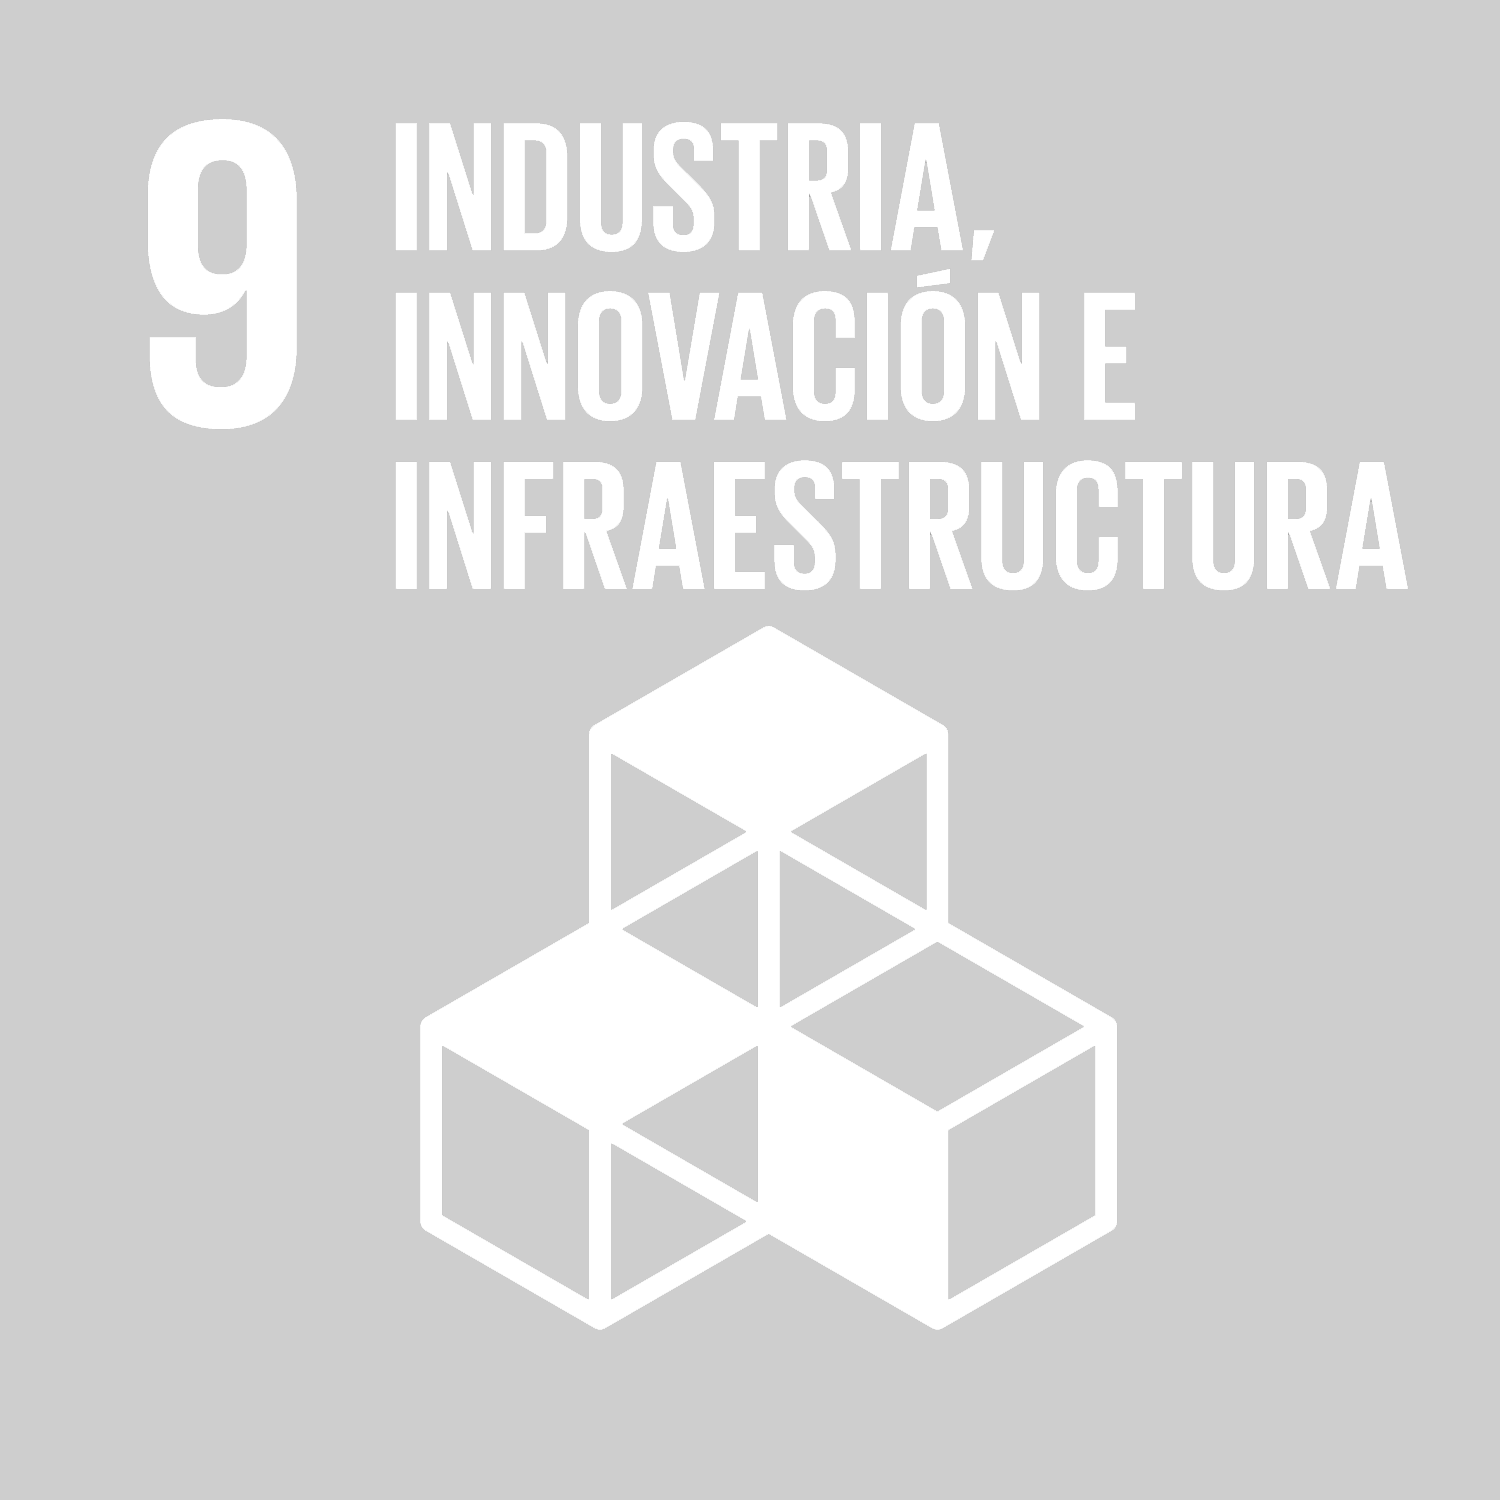 Objetivo 9: Industria, innovación e infraestructuras